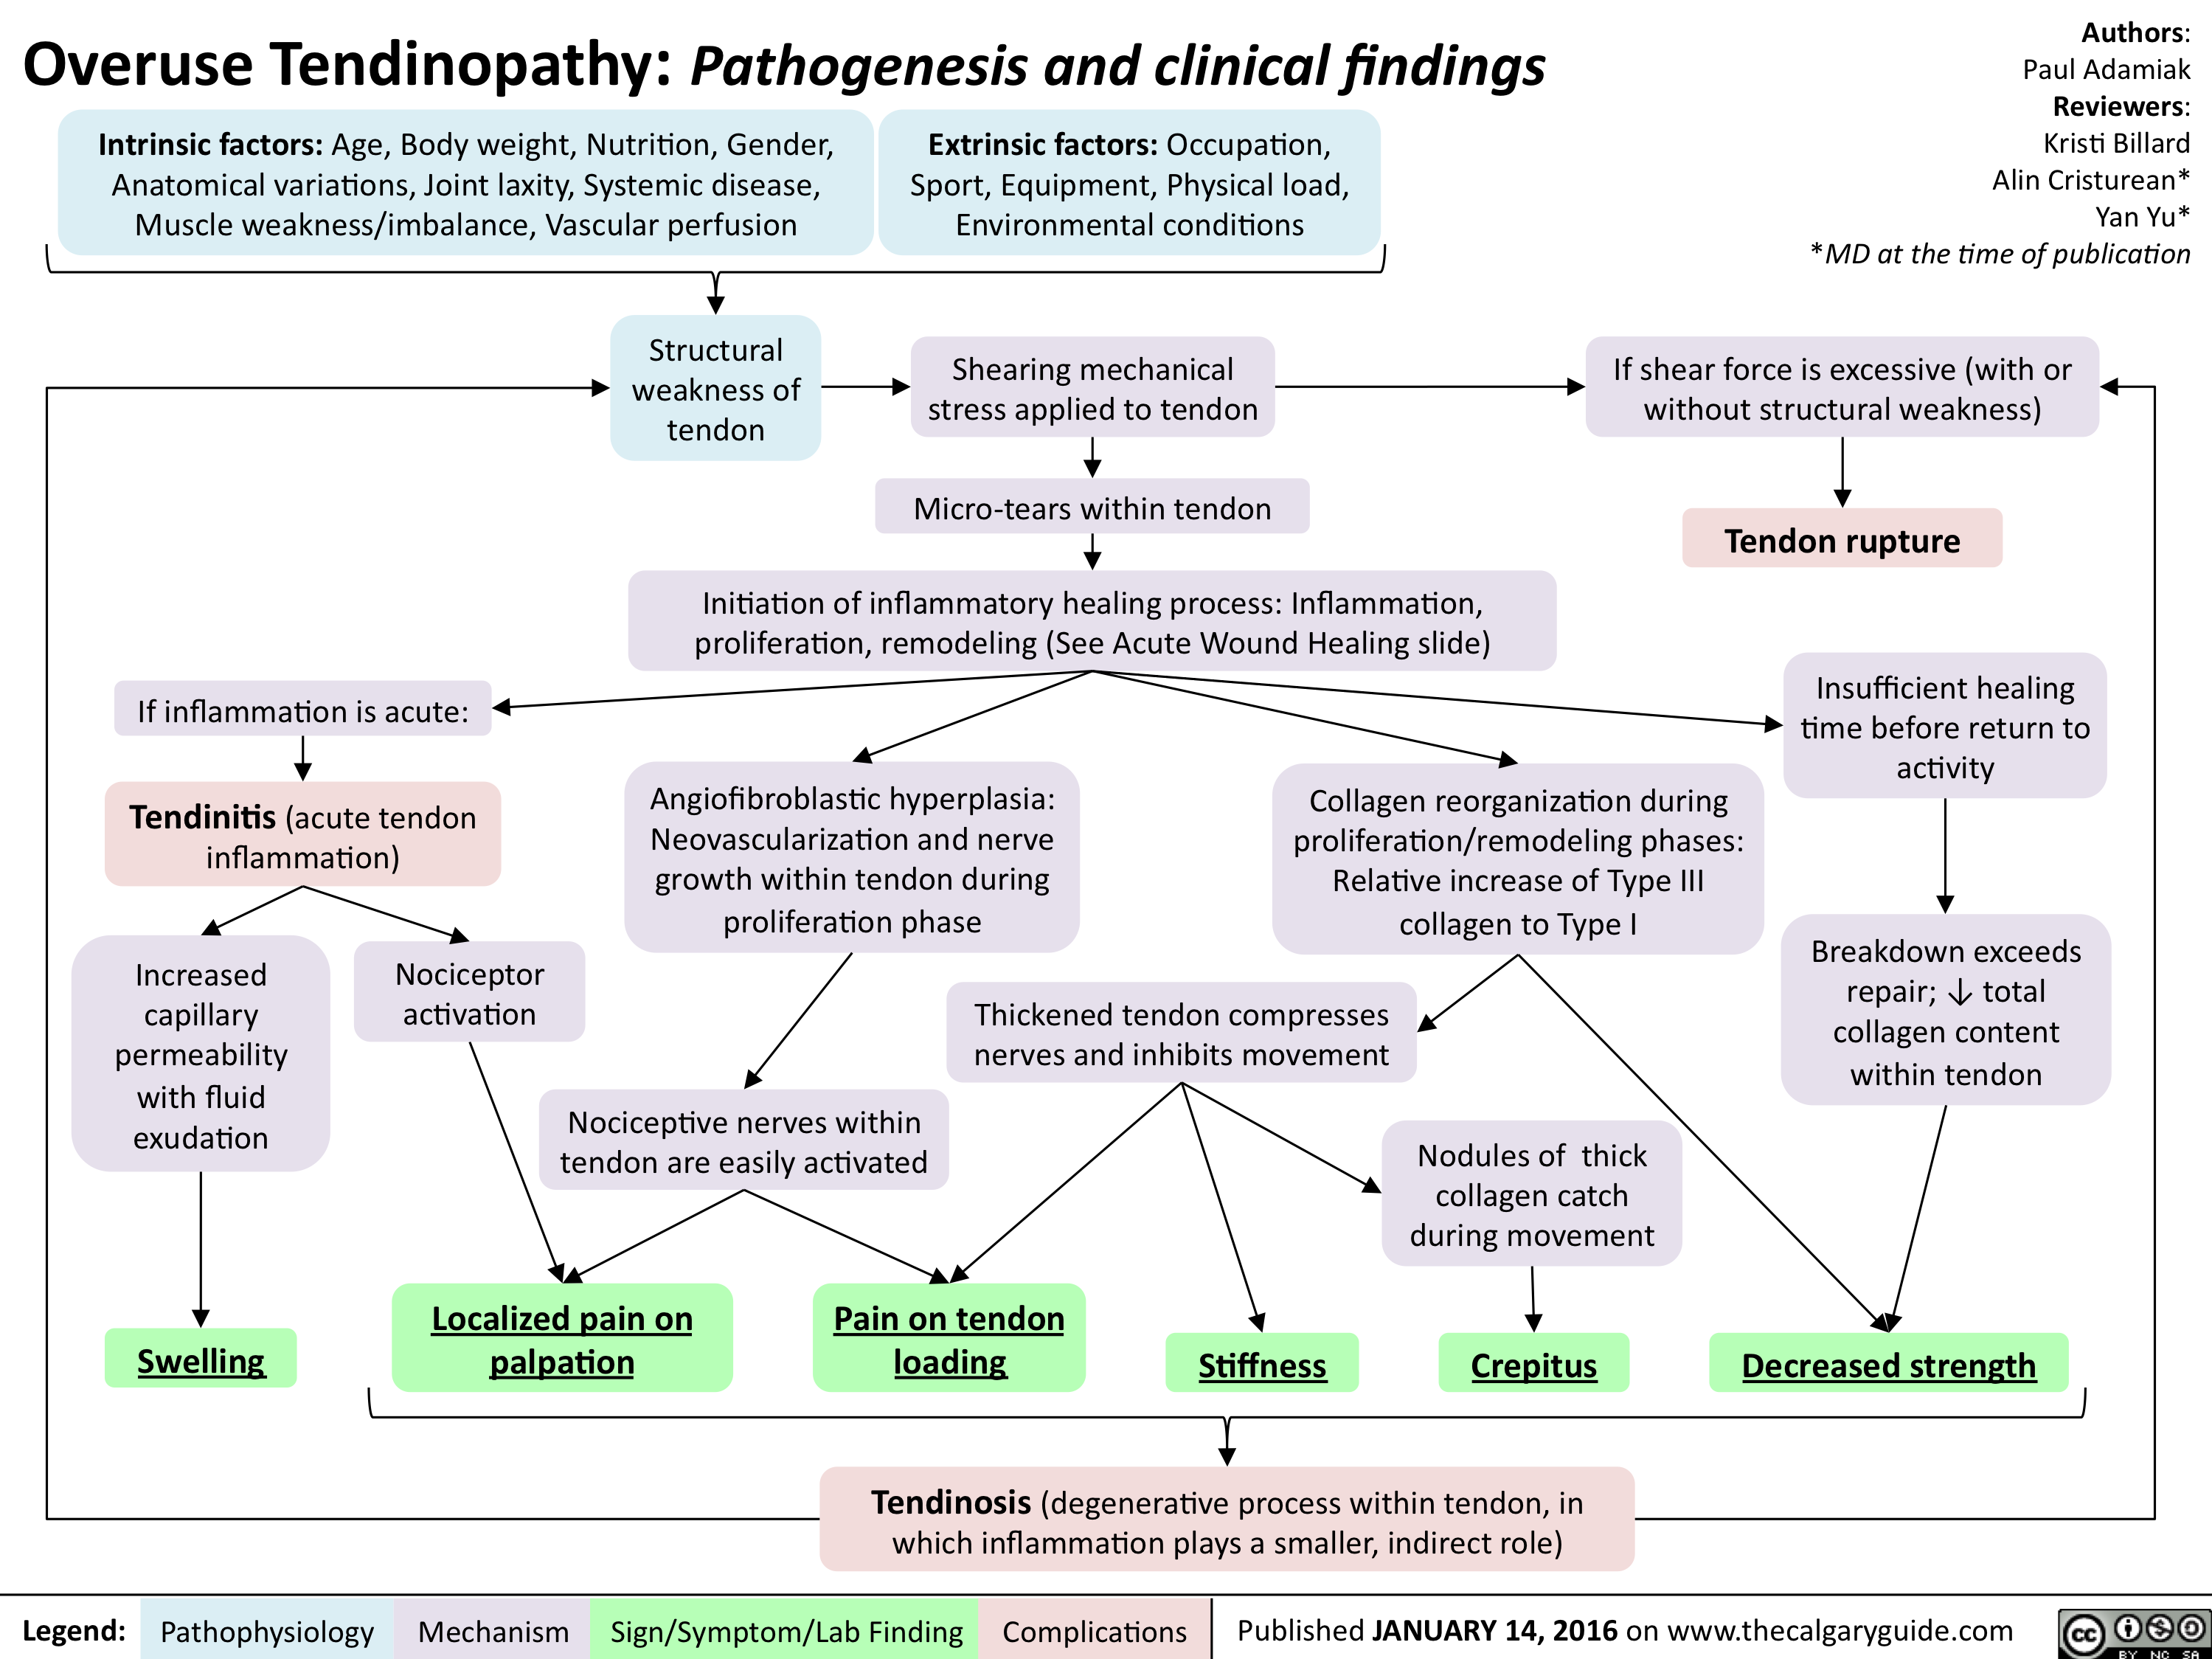 Overuse Tendinopathy -Pathogenesis and clinical findings